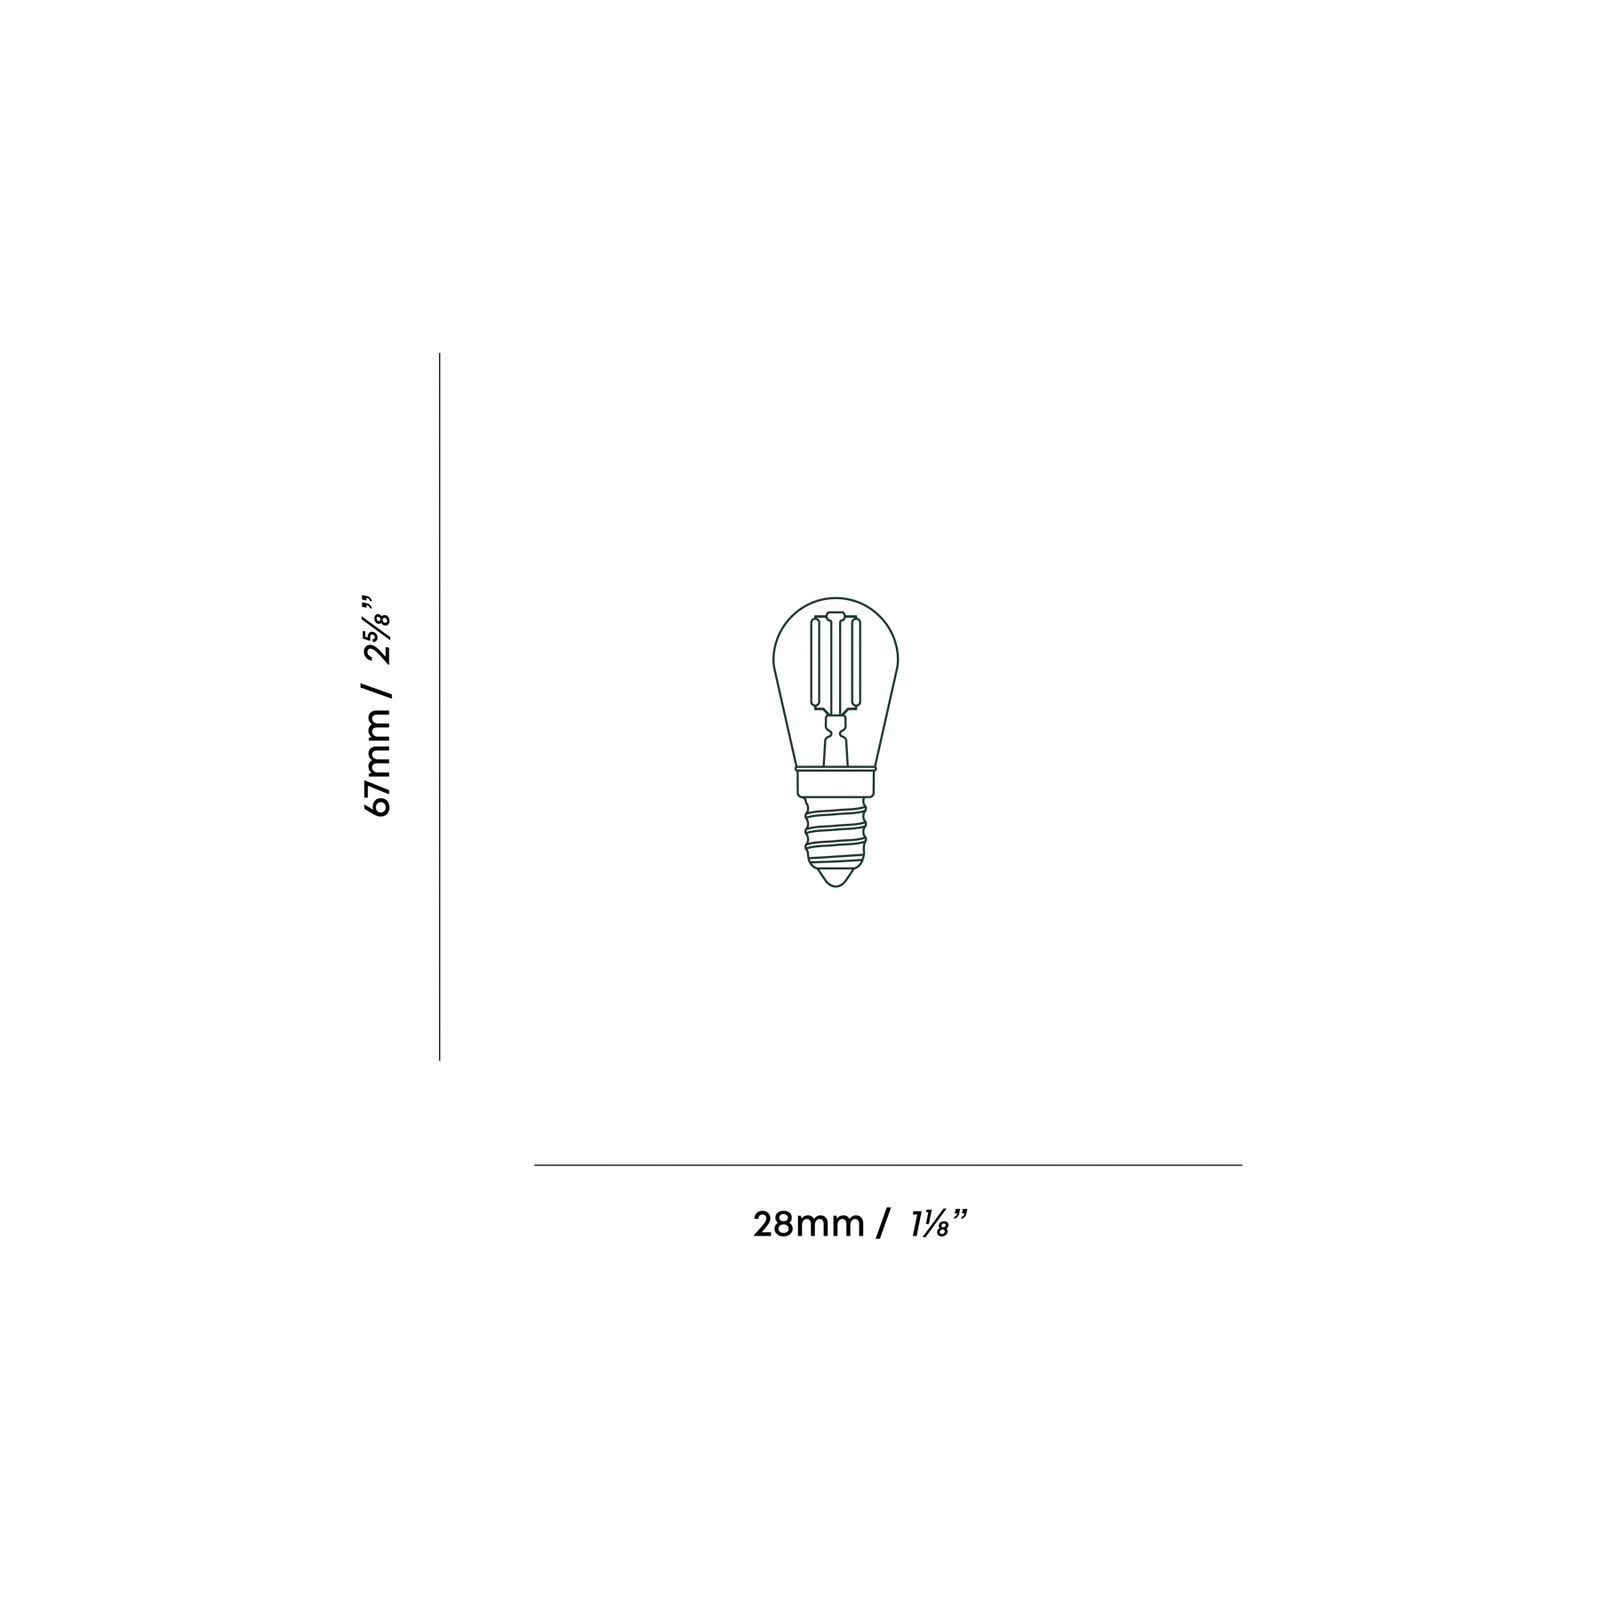 Tala LED bulb E14, 2W, tinted glass, 2,200 K, 120 lm